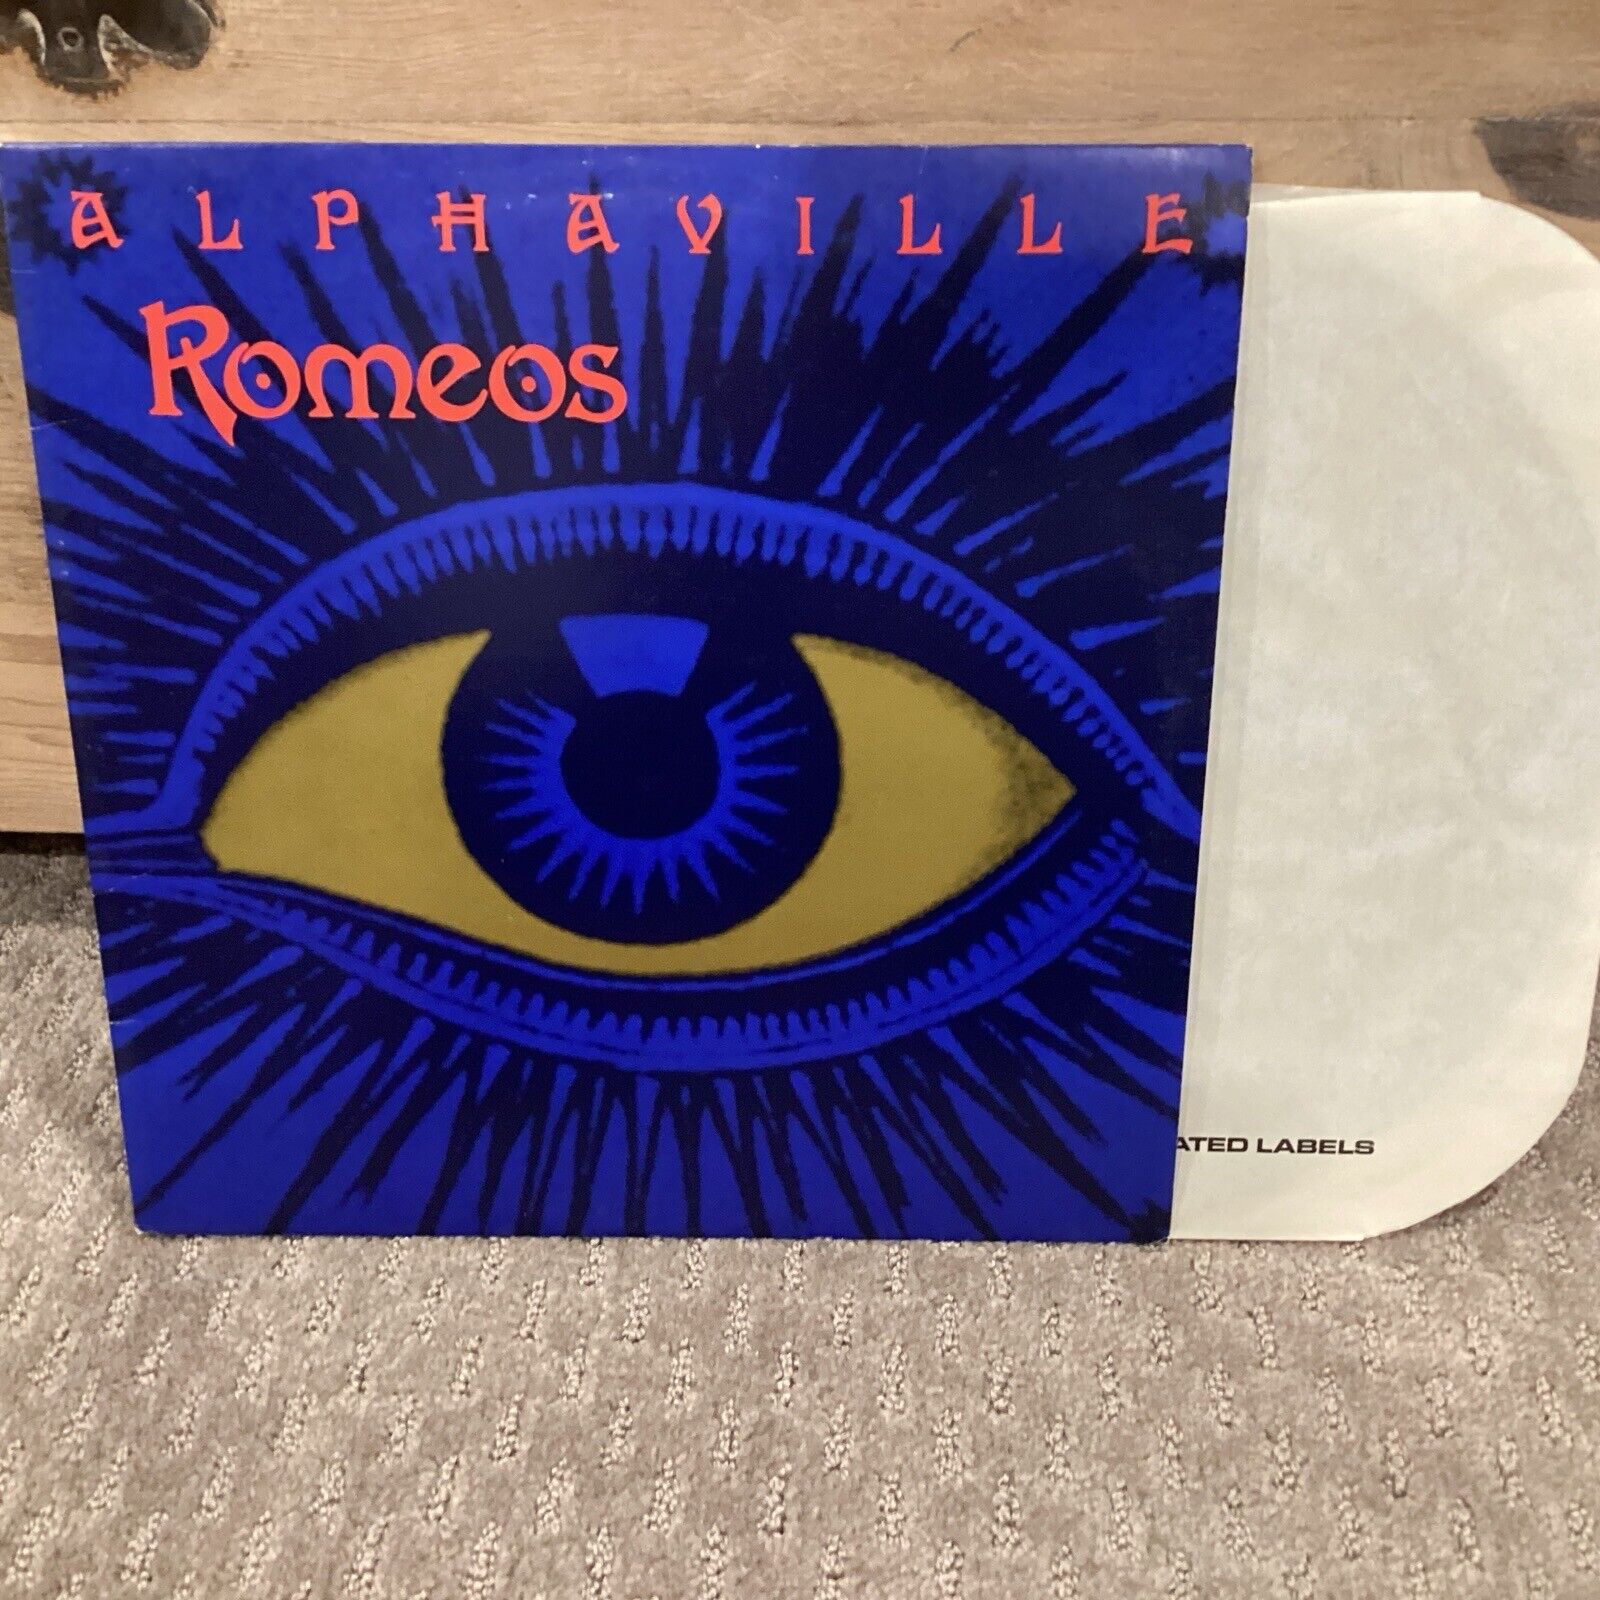 Alphaville - Romeos - Used Vinyl Record